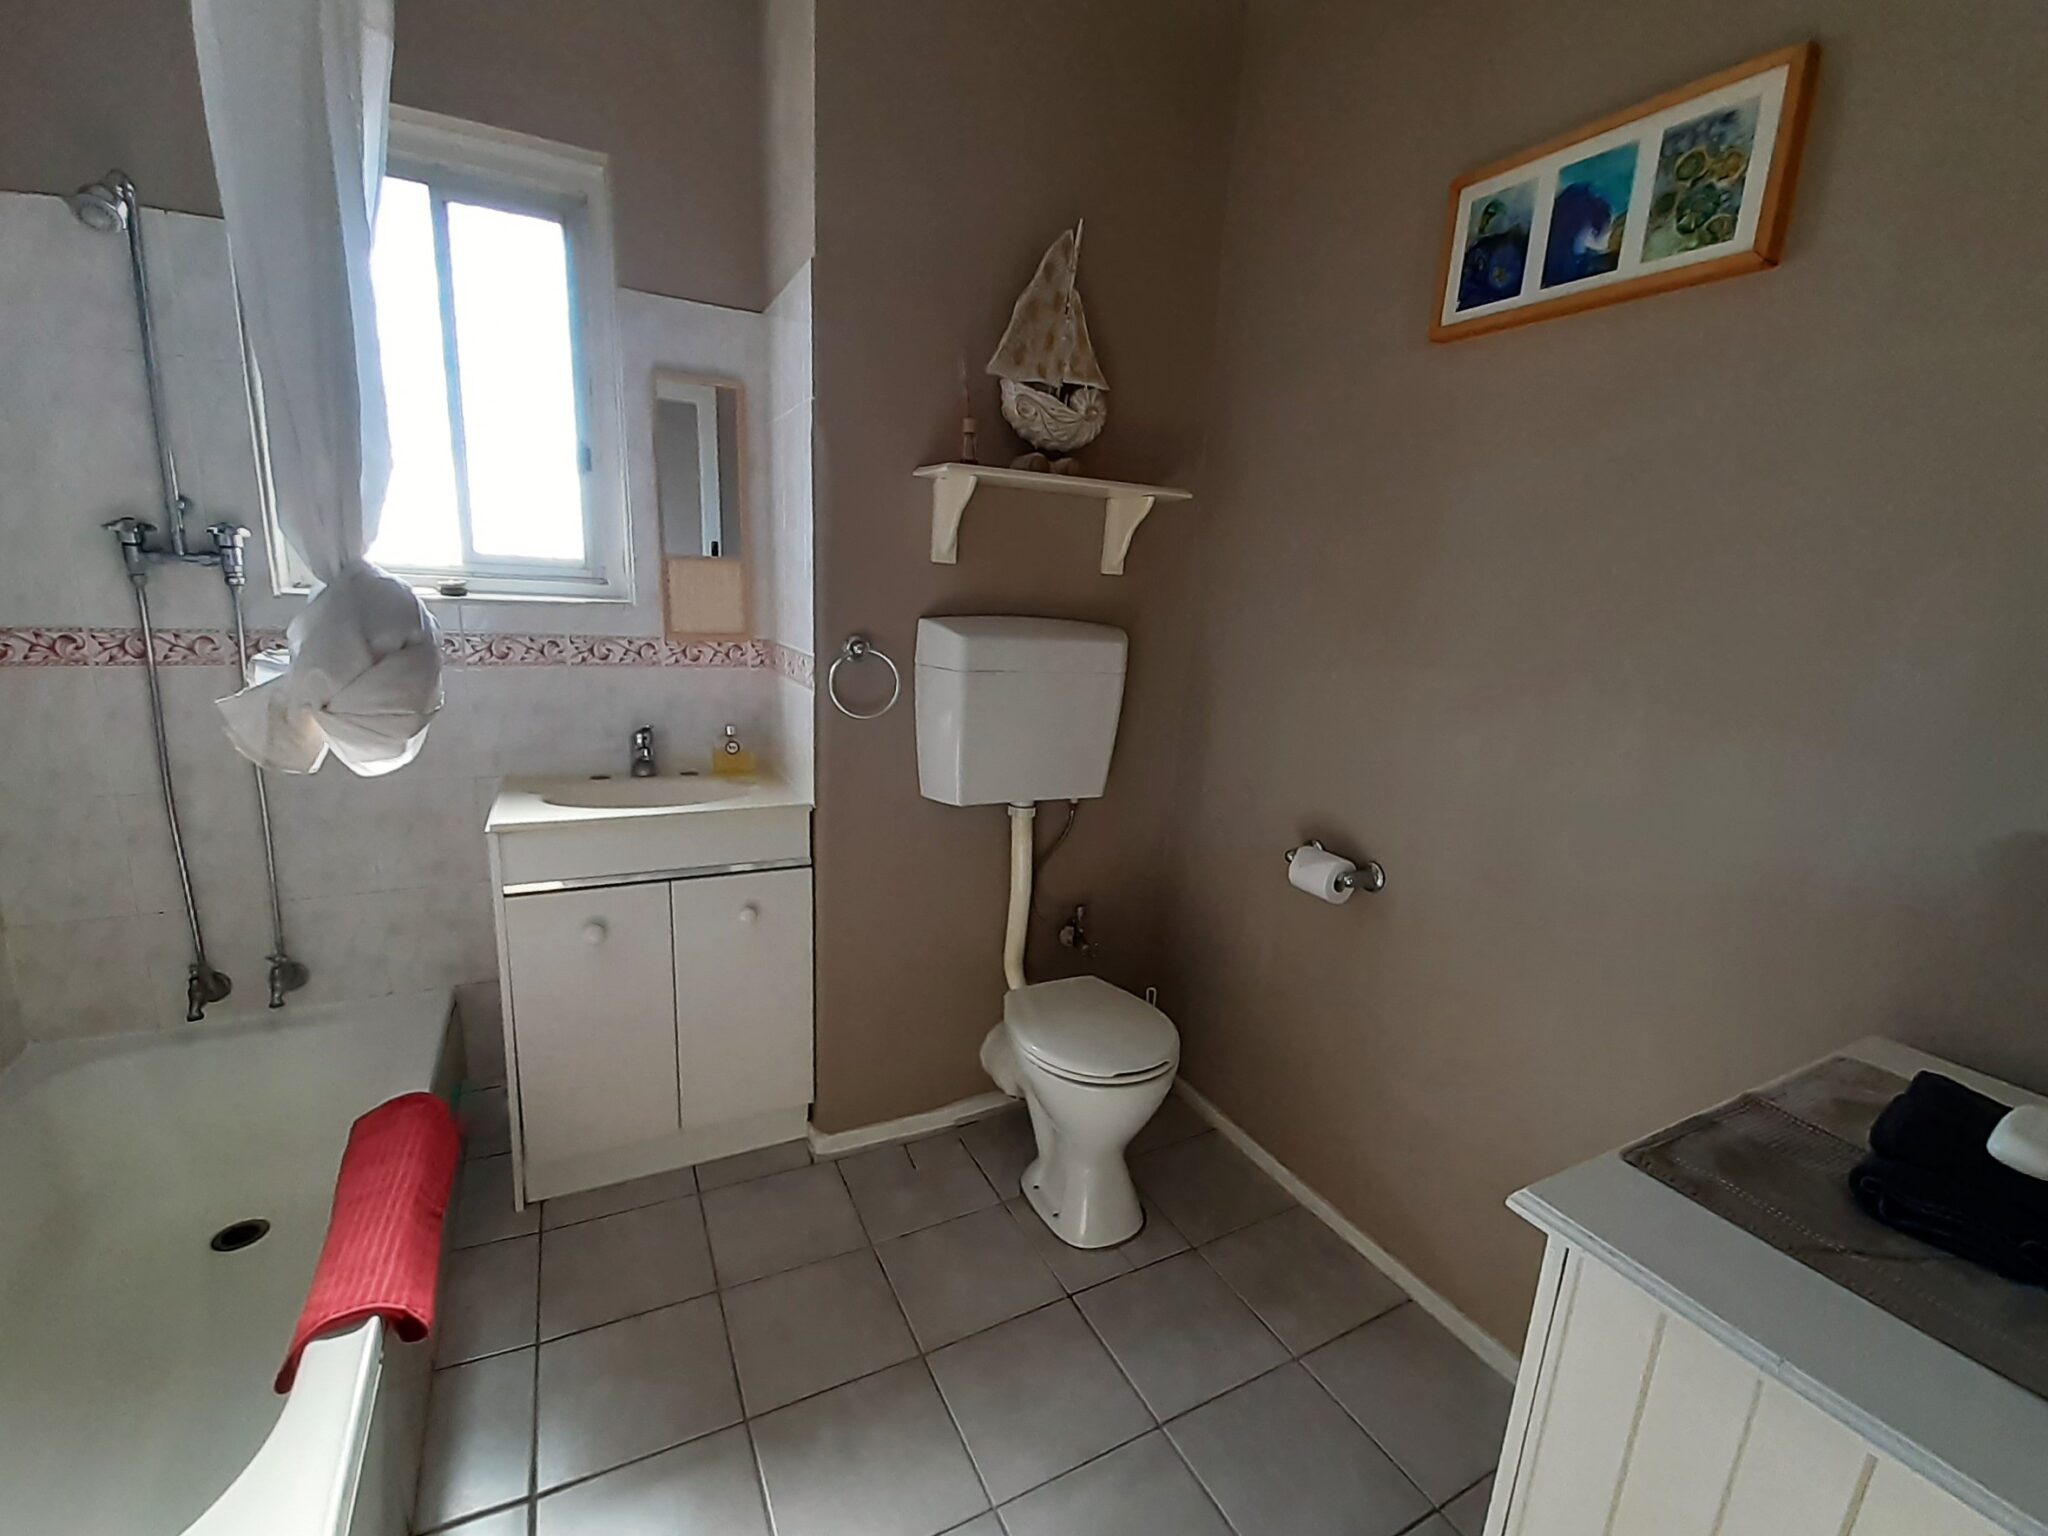 Bathroom in Monet's Retro